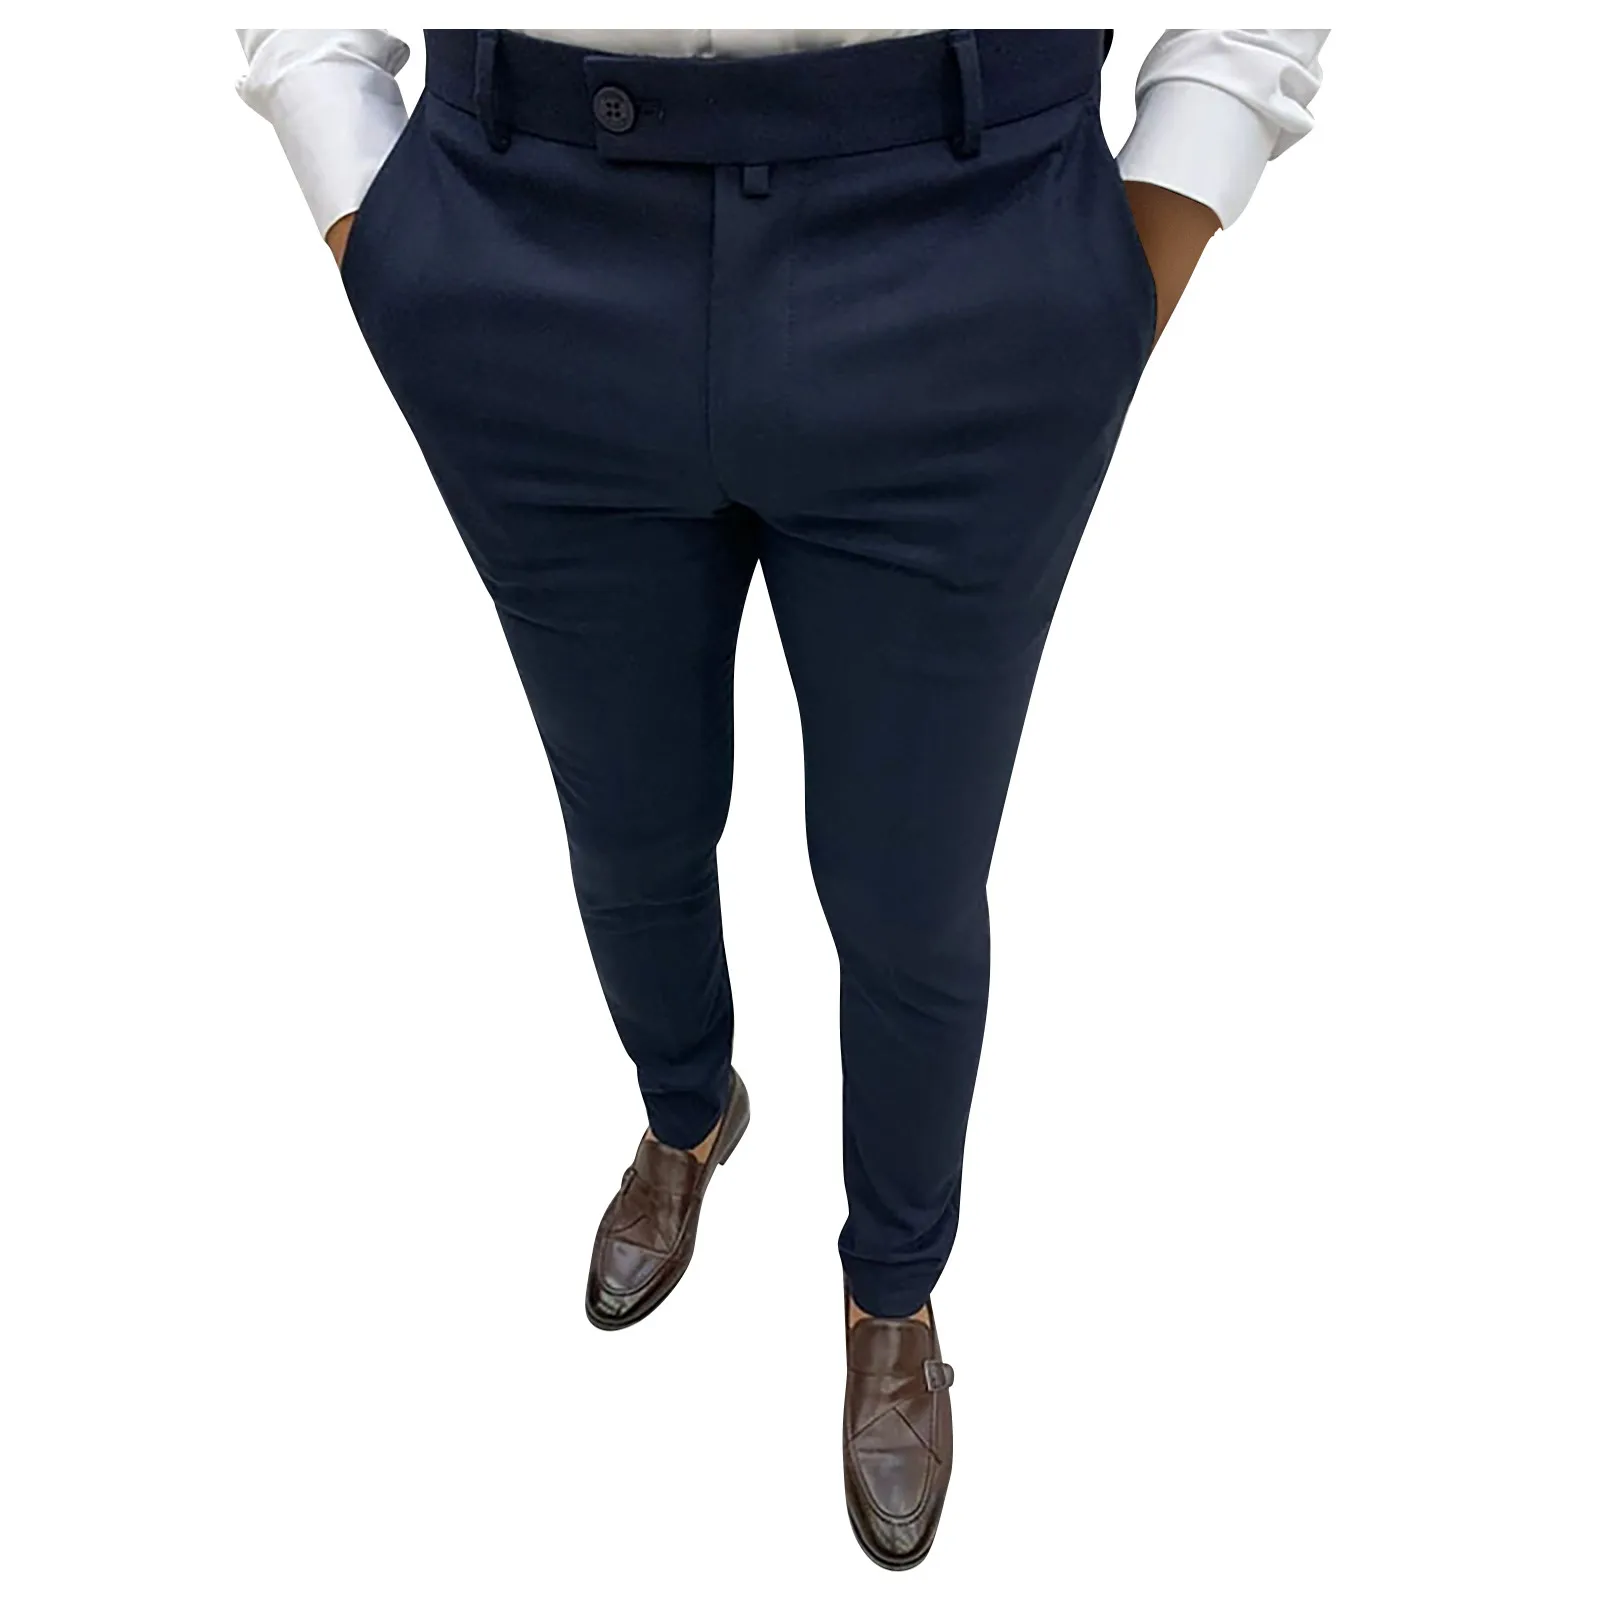 Calça casual masculina formal, slim fit, monocromática,